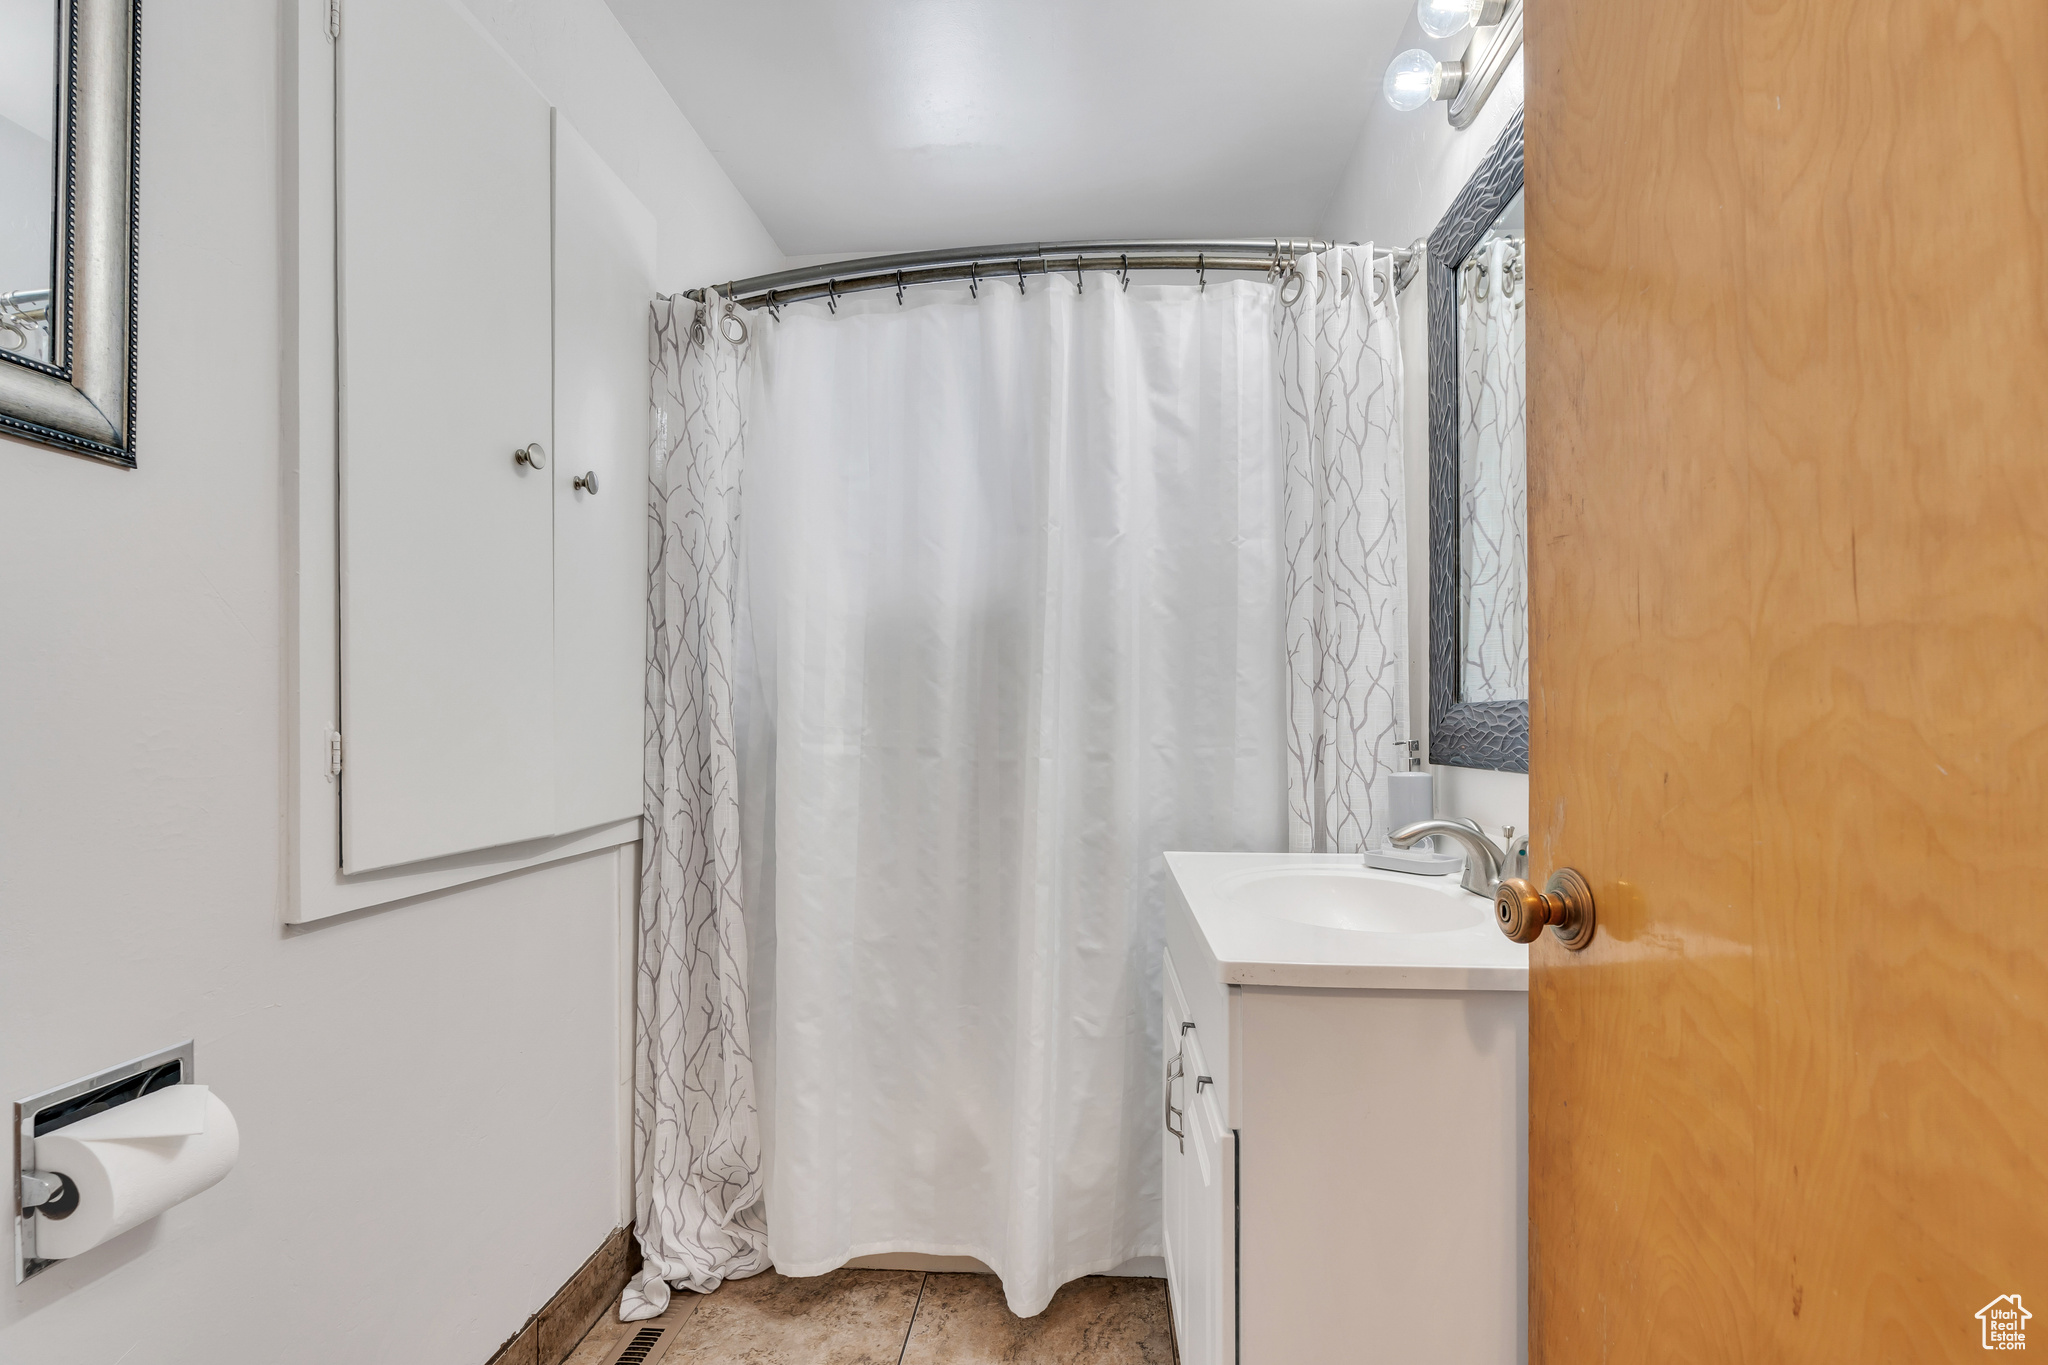 Quaint Bathroom with Tub/Shower combo